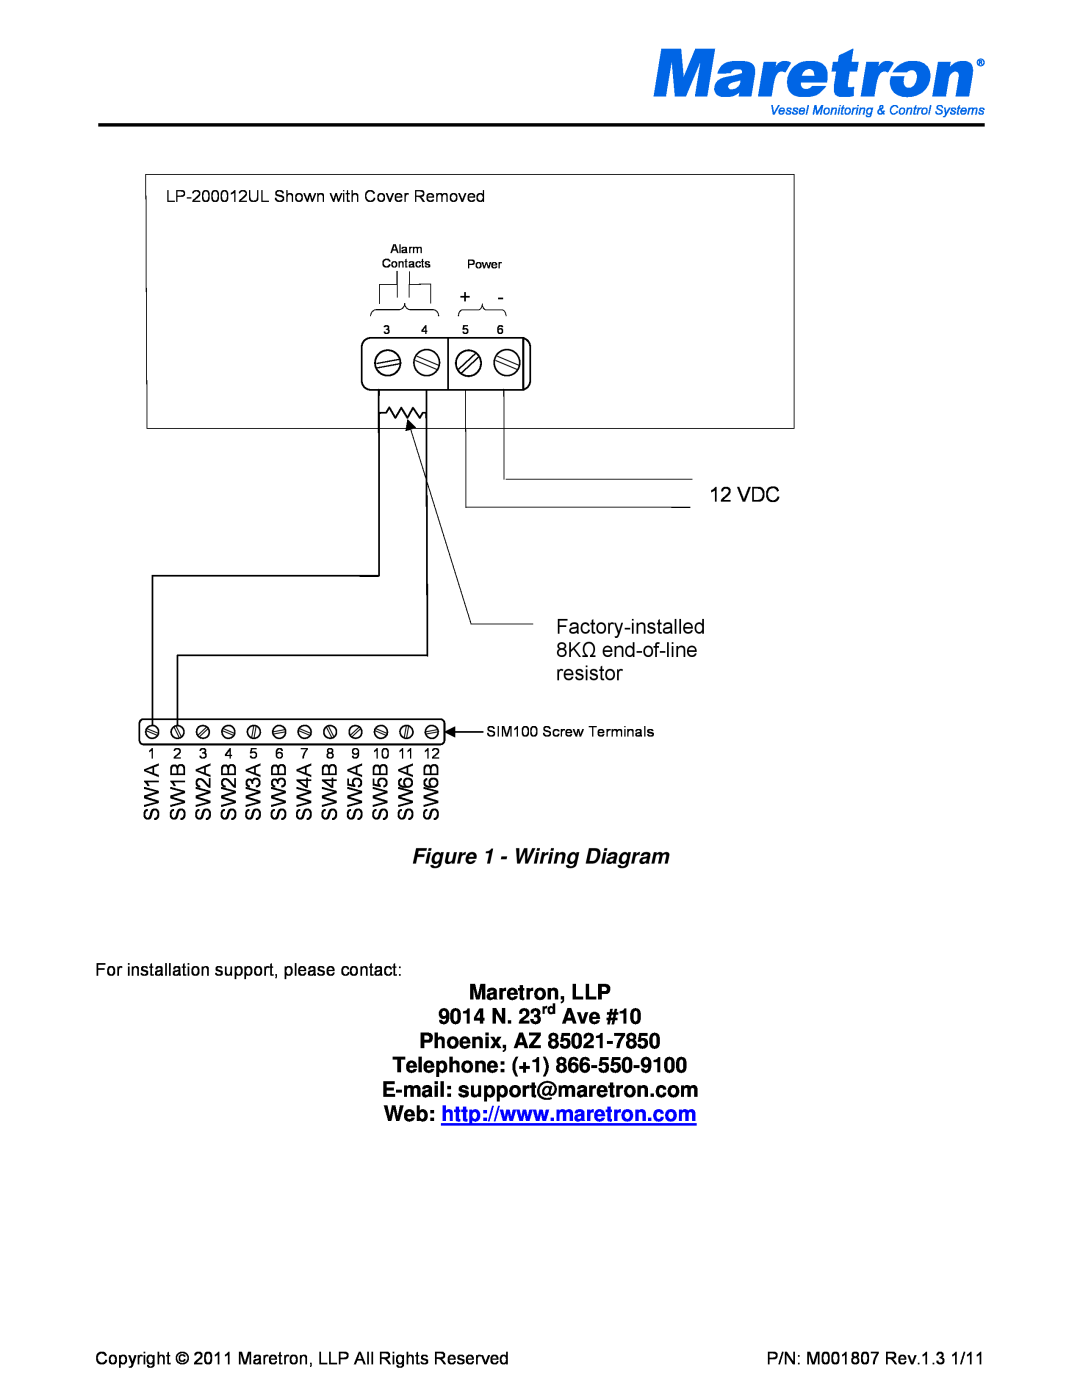 Maretron LP-200012UL installation instructions Maretron, LLP 9014 N. 23rd Ave #10 Phoenix, AZ, Wiring Diagram 